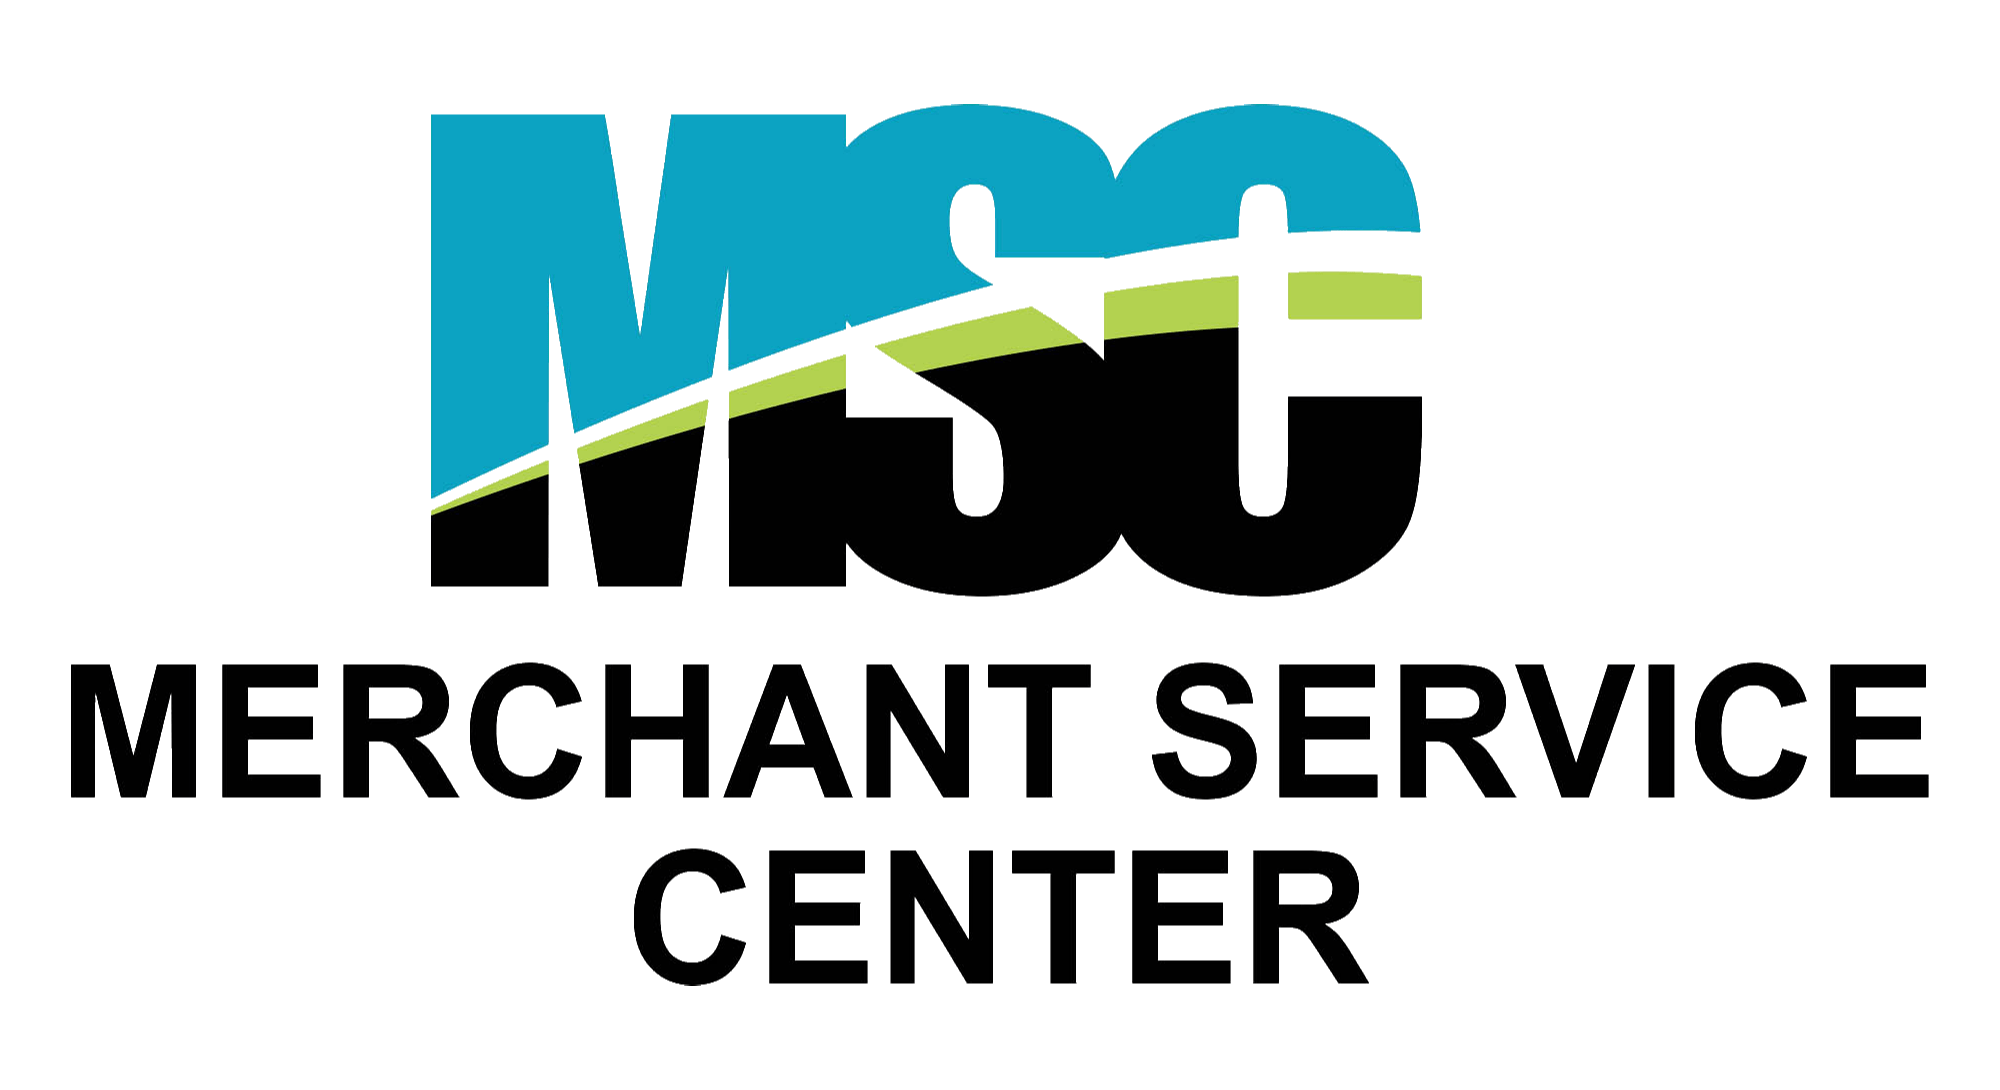 MSC MERCHANT SERVICE CENTER